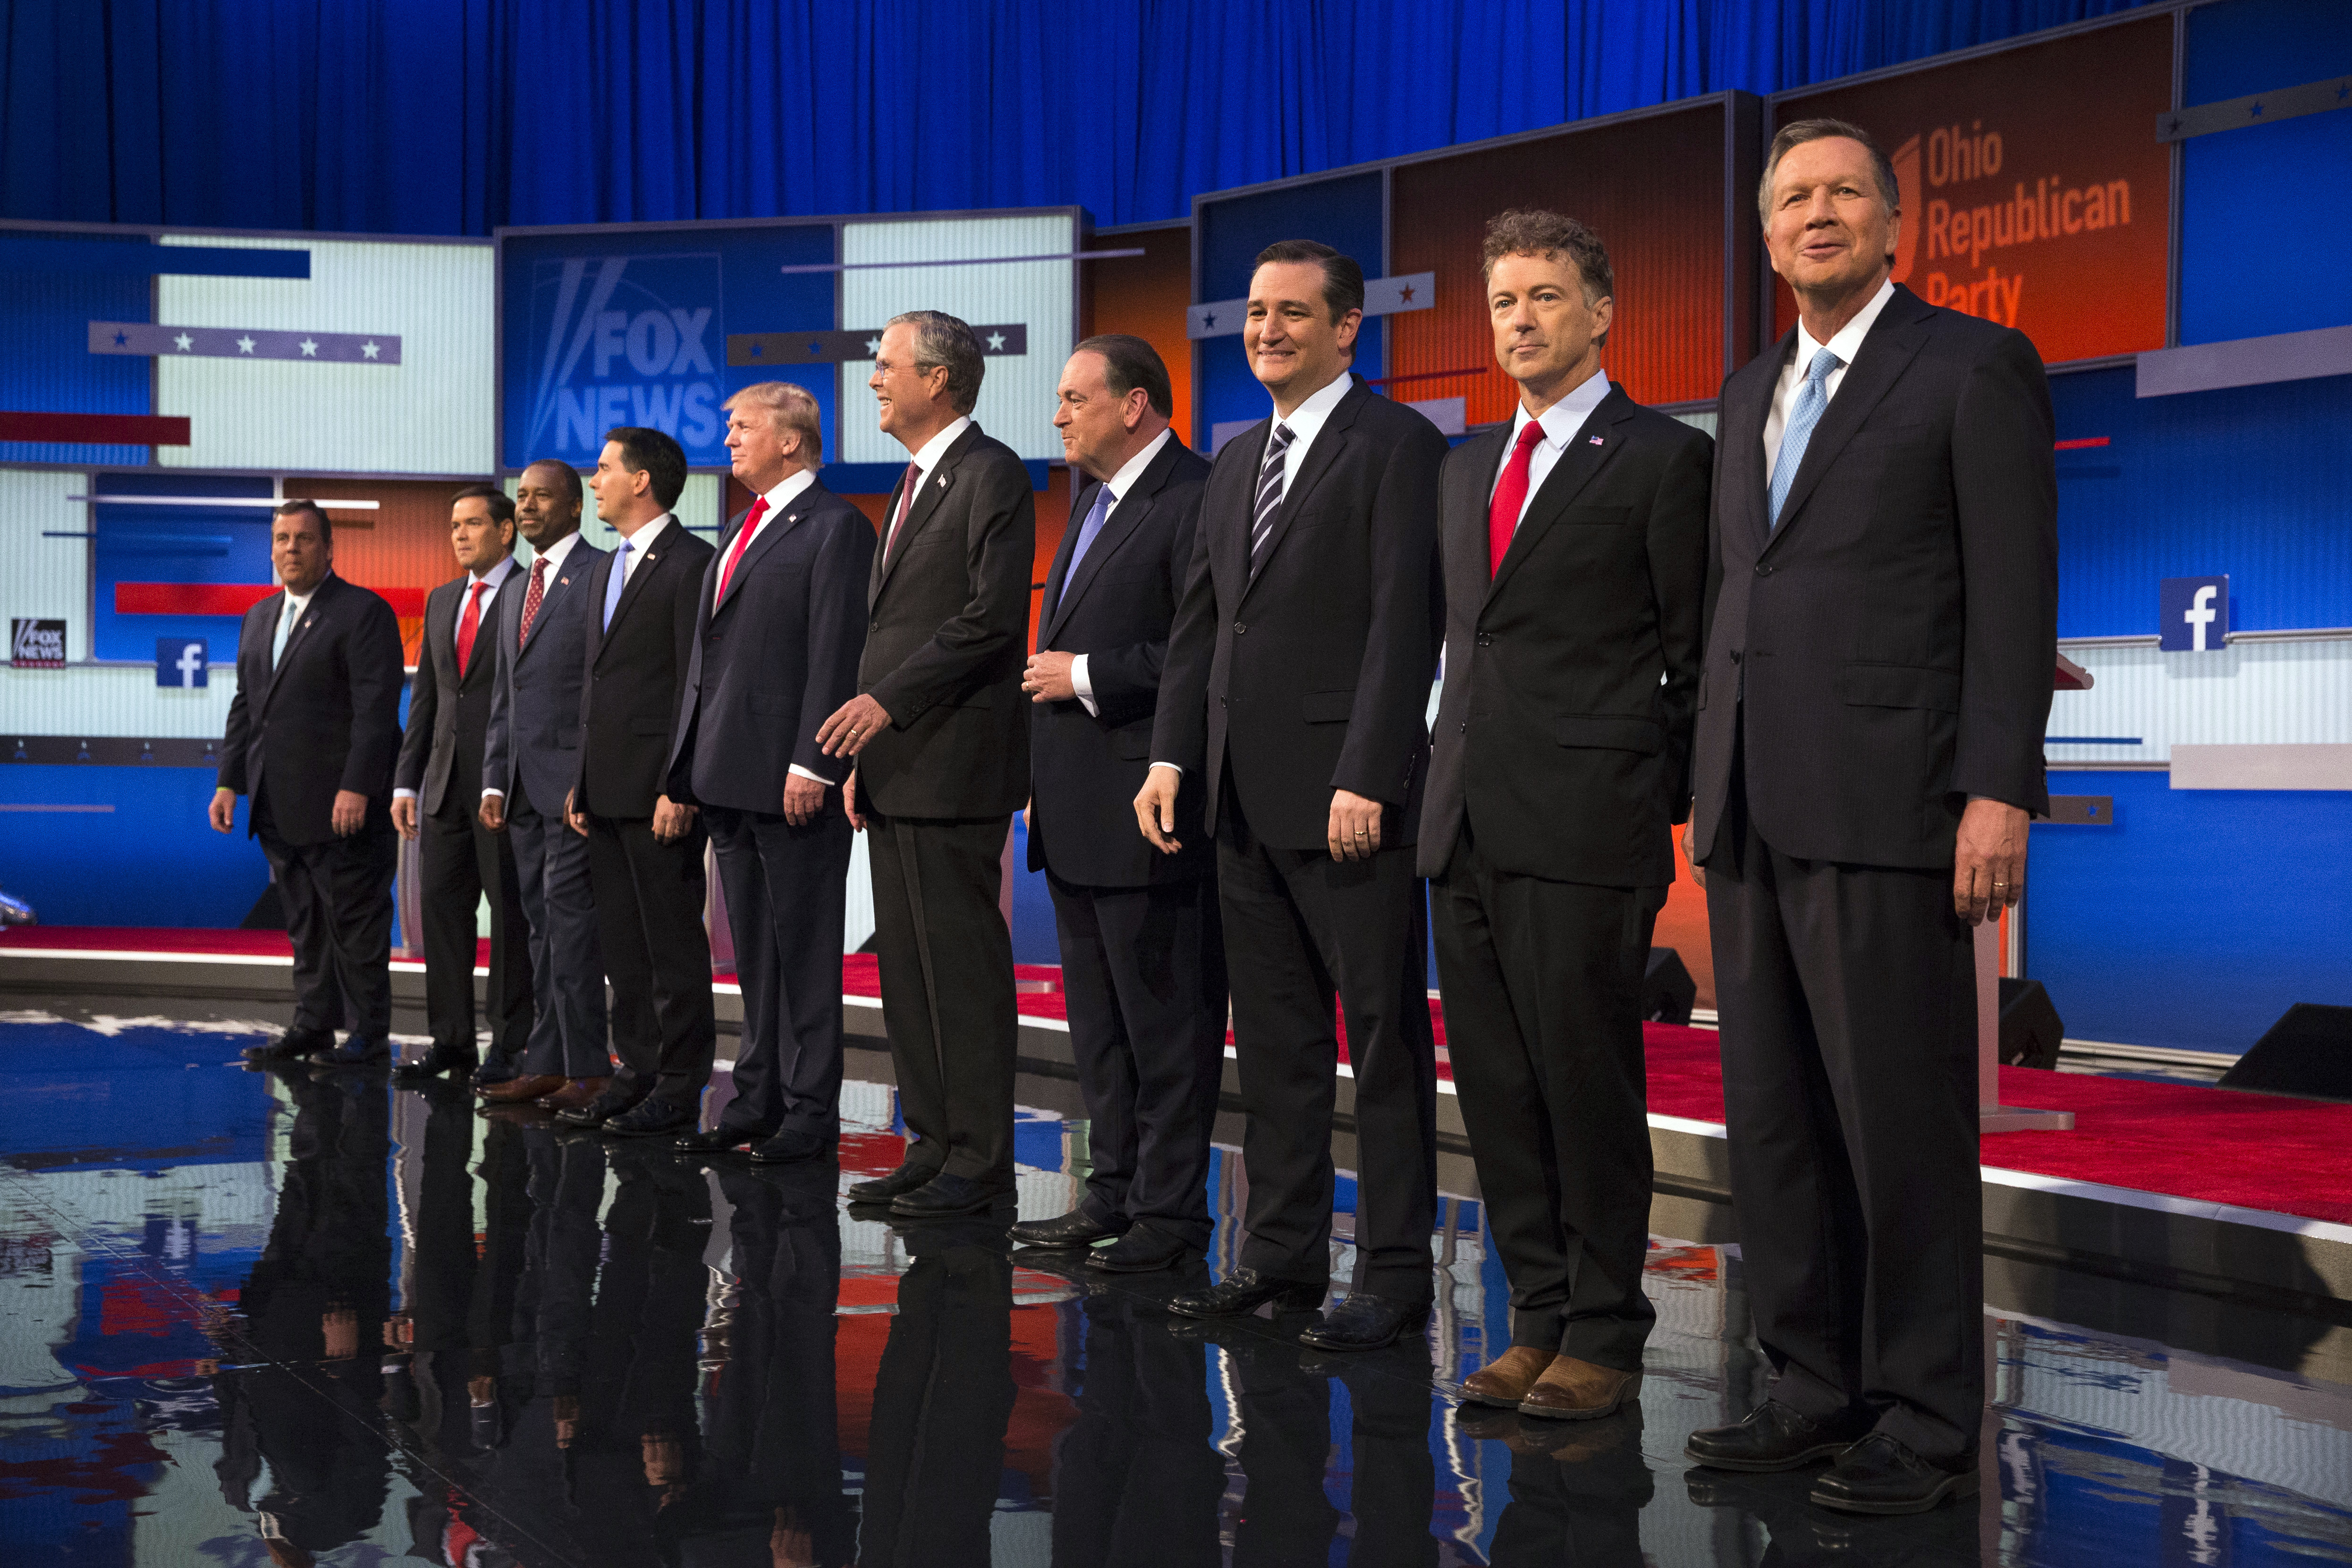 GOP Debate: Highlights, analysis of the first Republican debate - CBS News